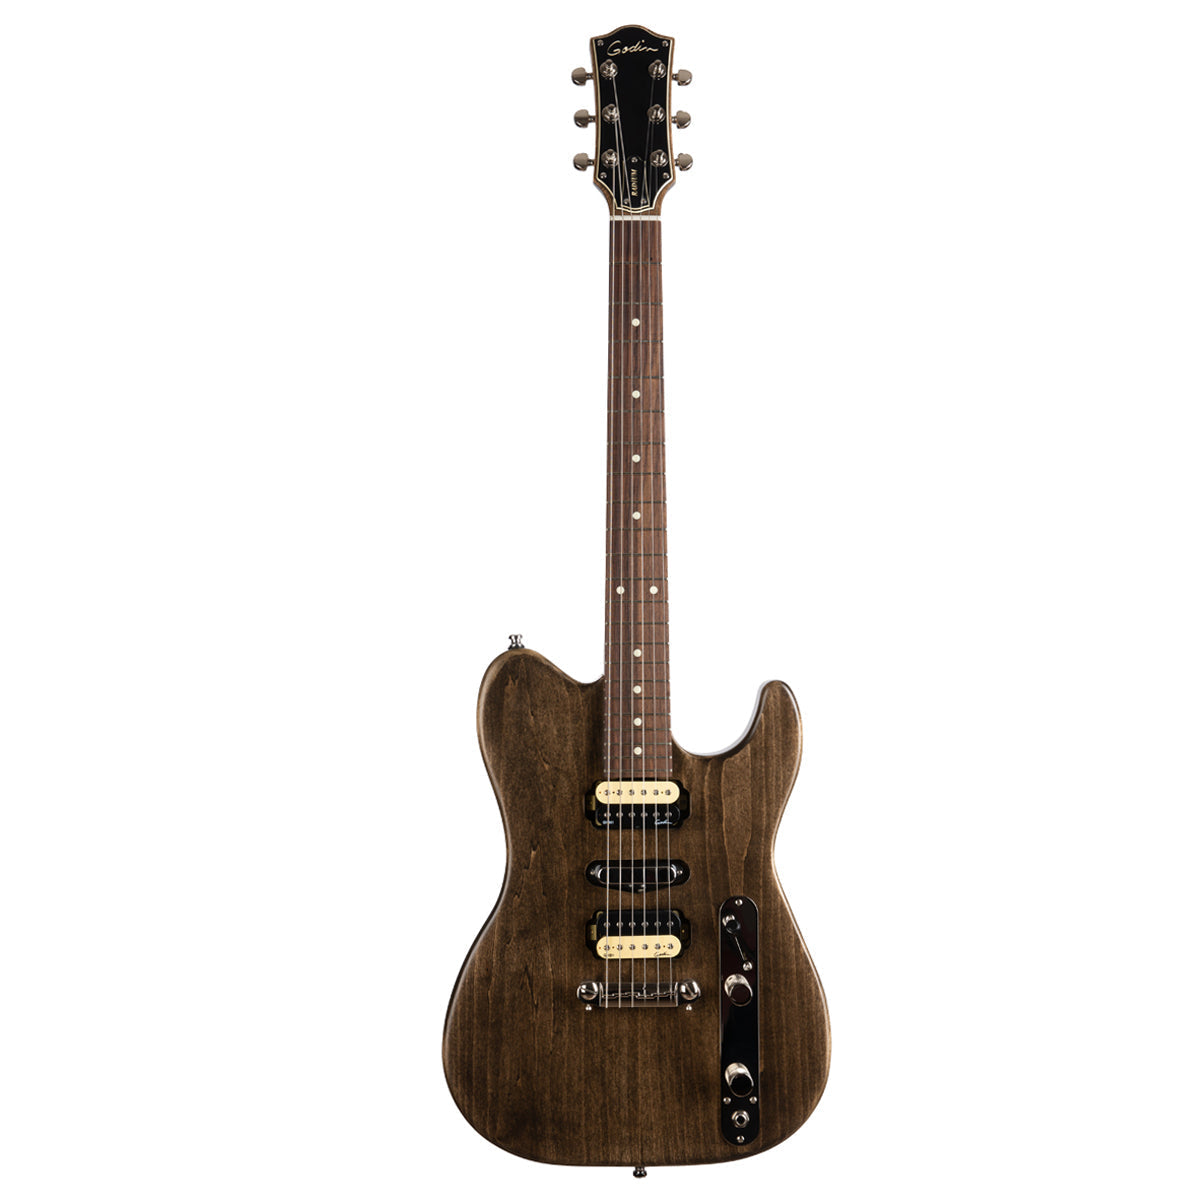 Godin Radium Electric Guitar ~ Desert Green RN, Electric Guitar for sale at Richards Guitars.